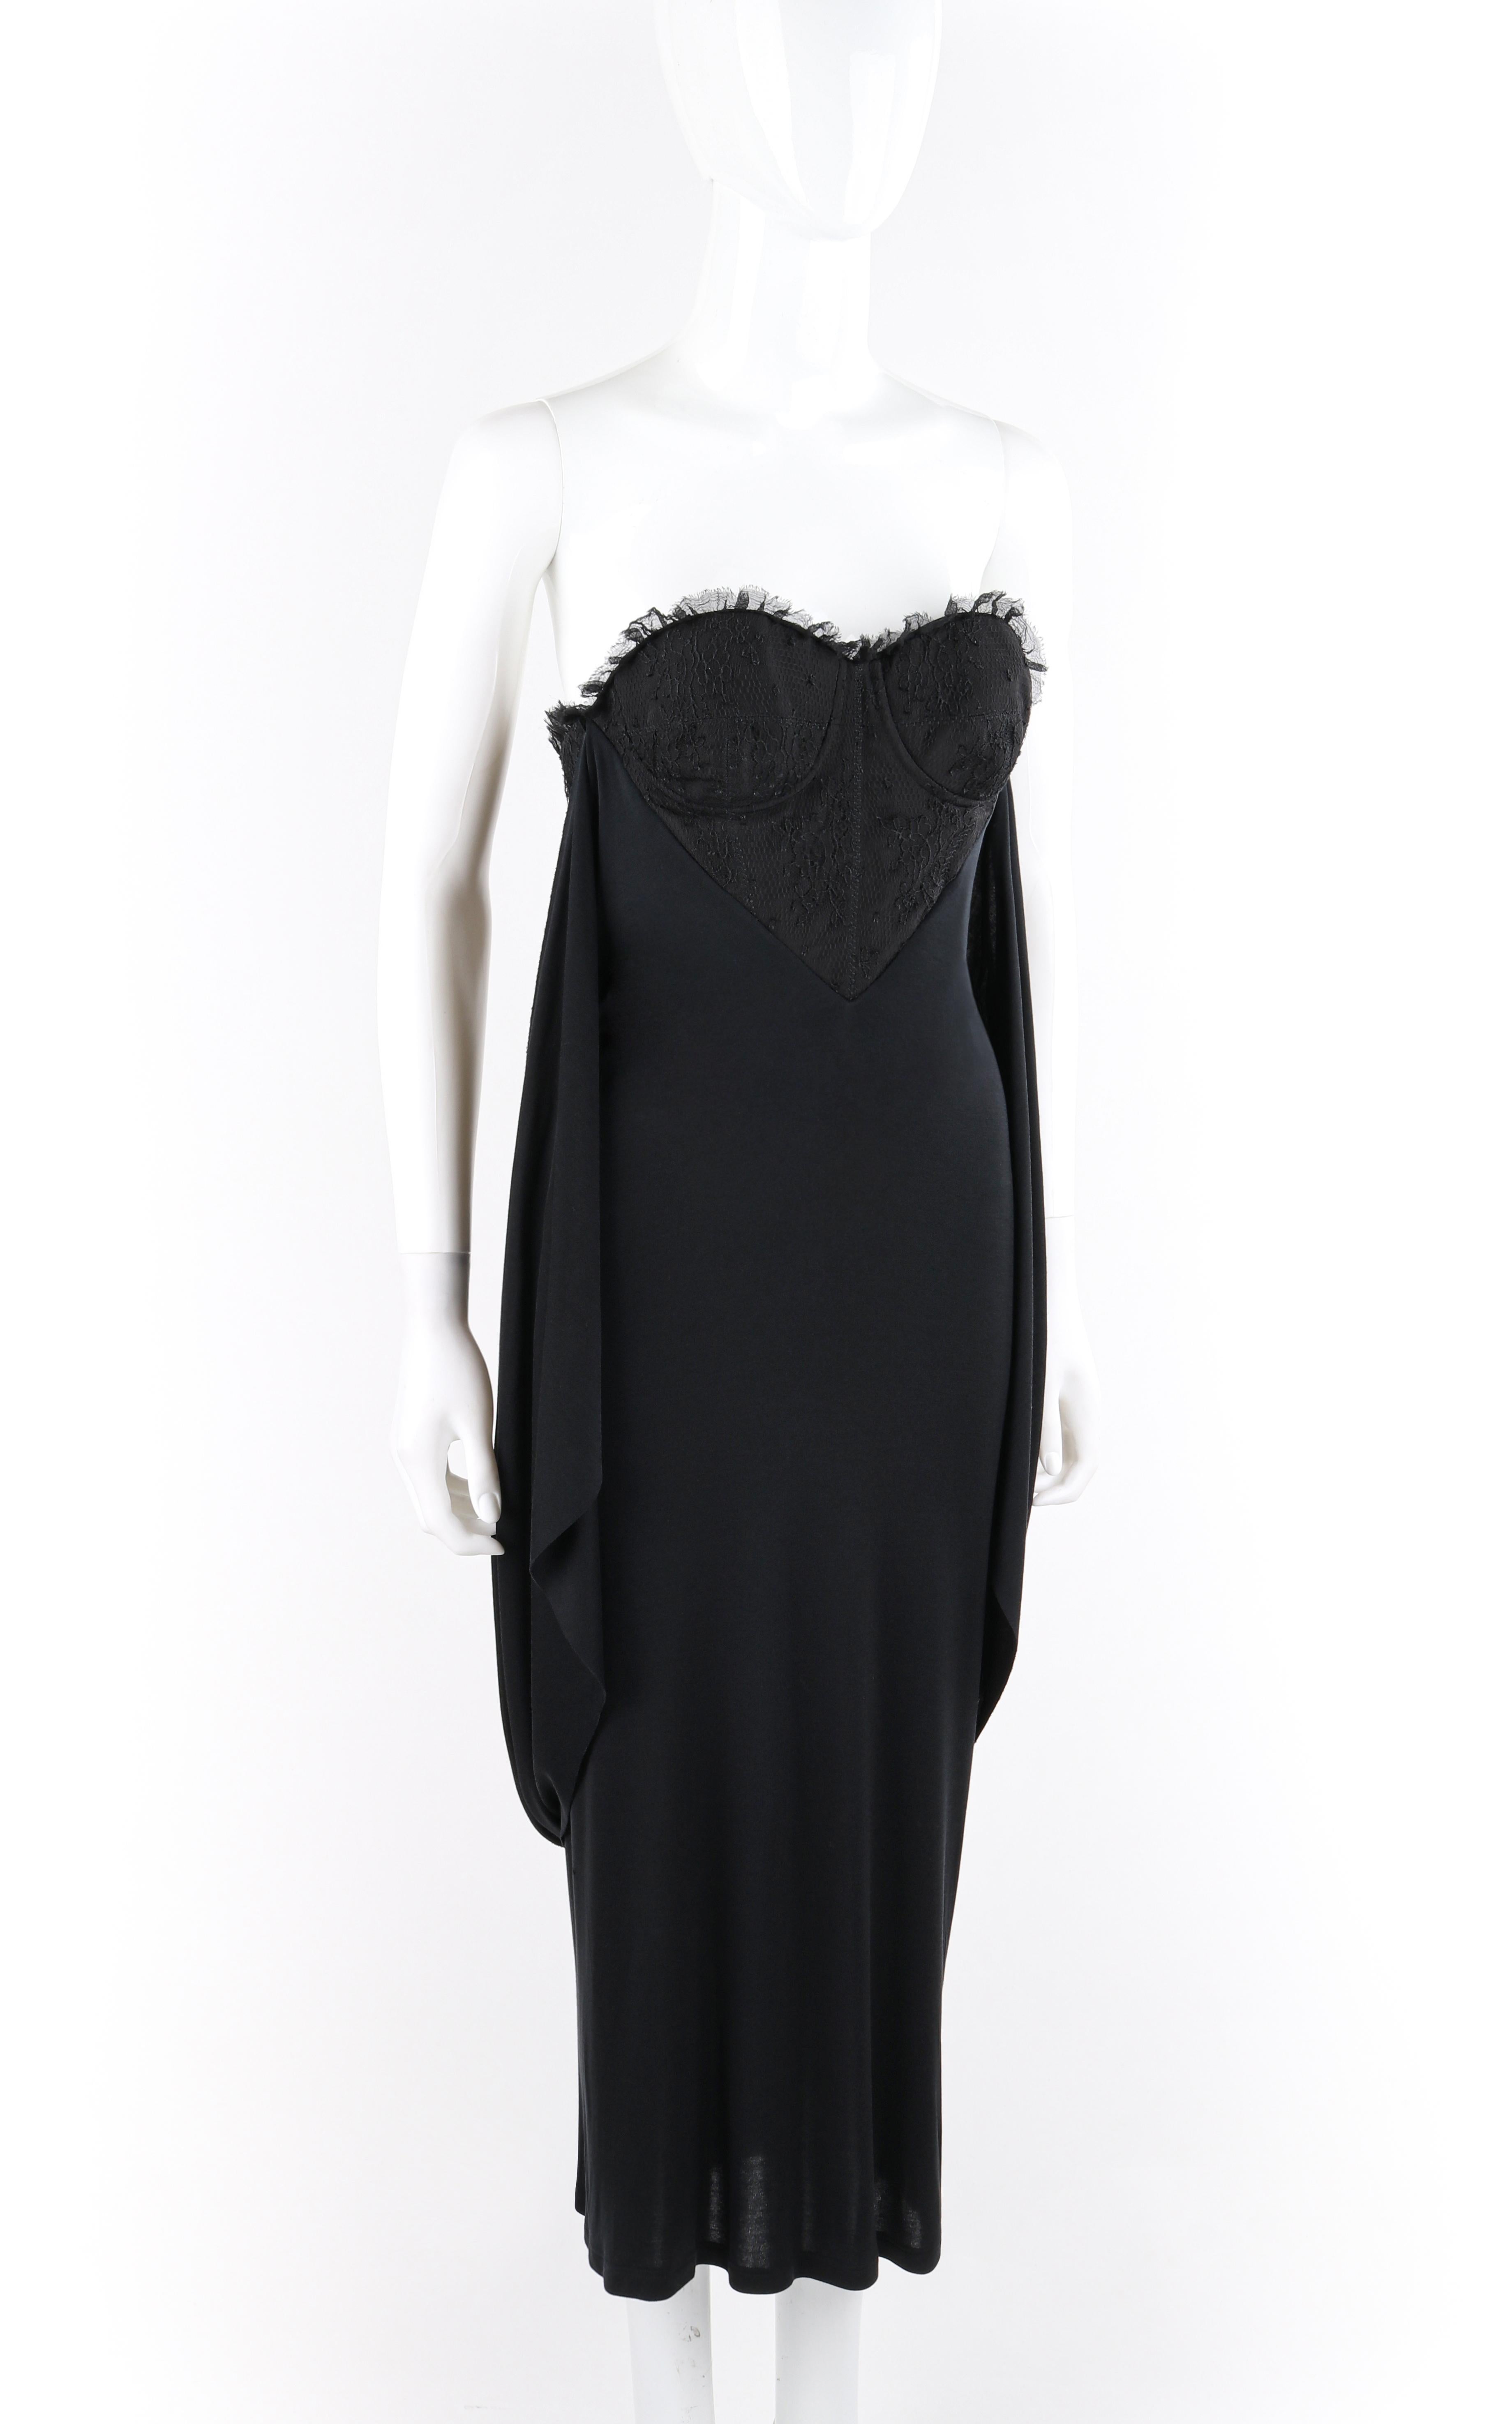 ALEXANDER McQUEEN S/S 2004 Black Multiway Bustier Midi Length Evening Dress  For Sale 2